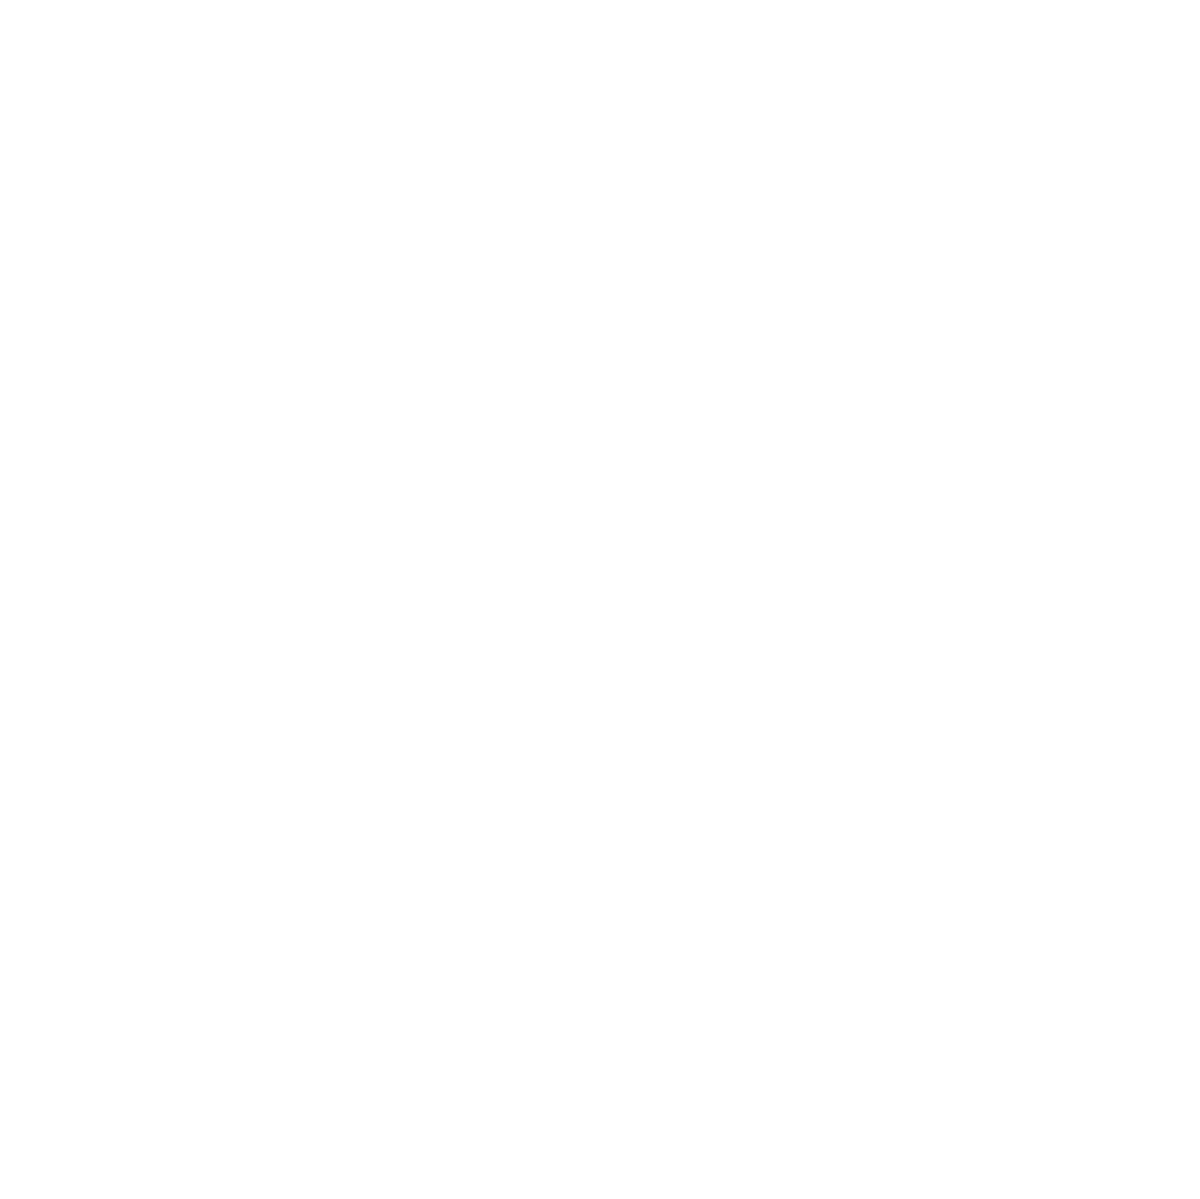 Arttor - Interior fittings